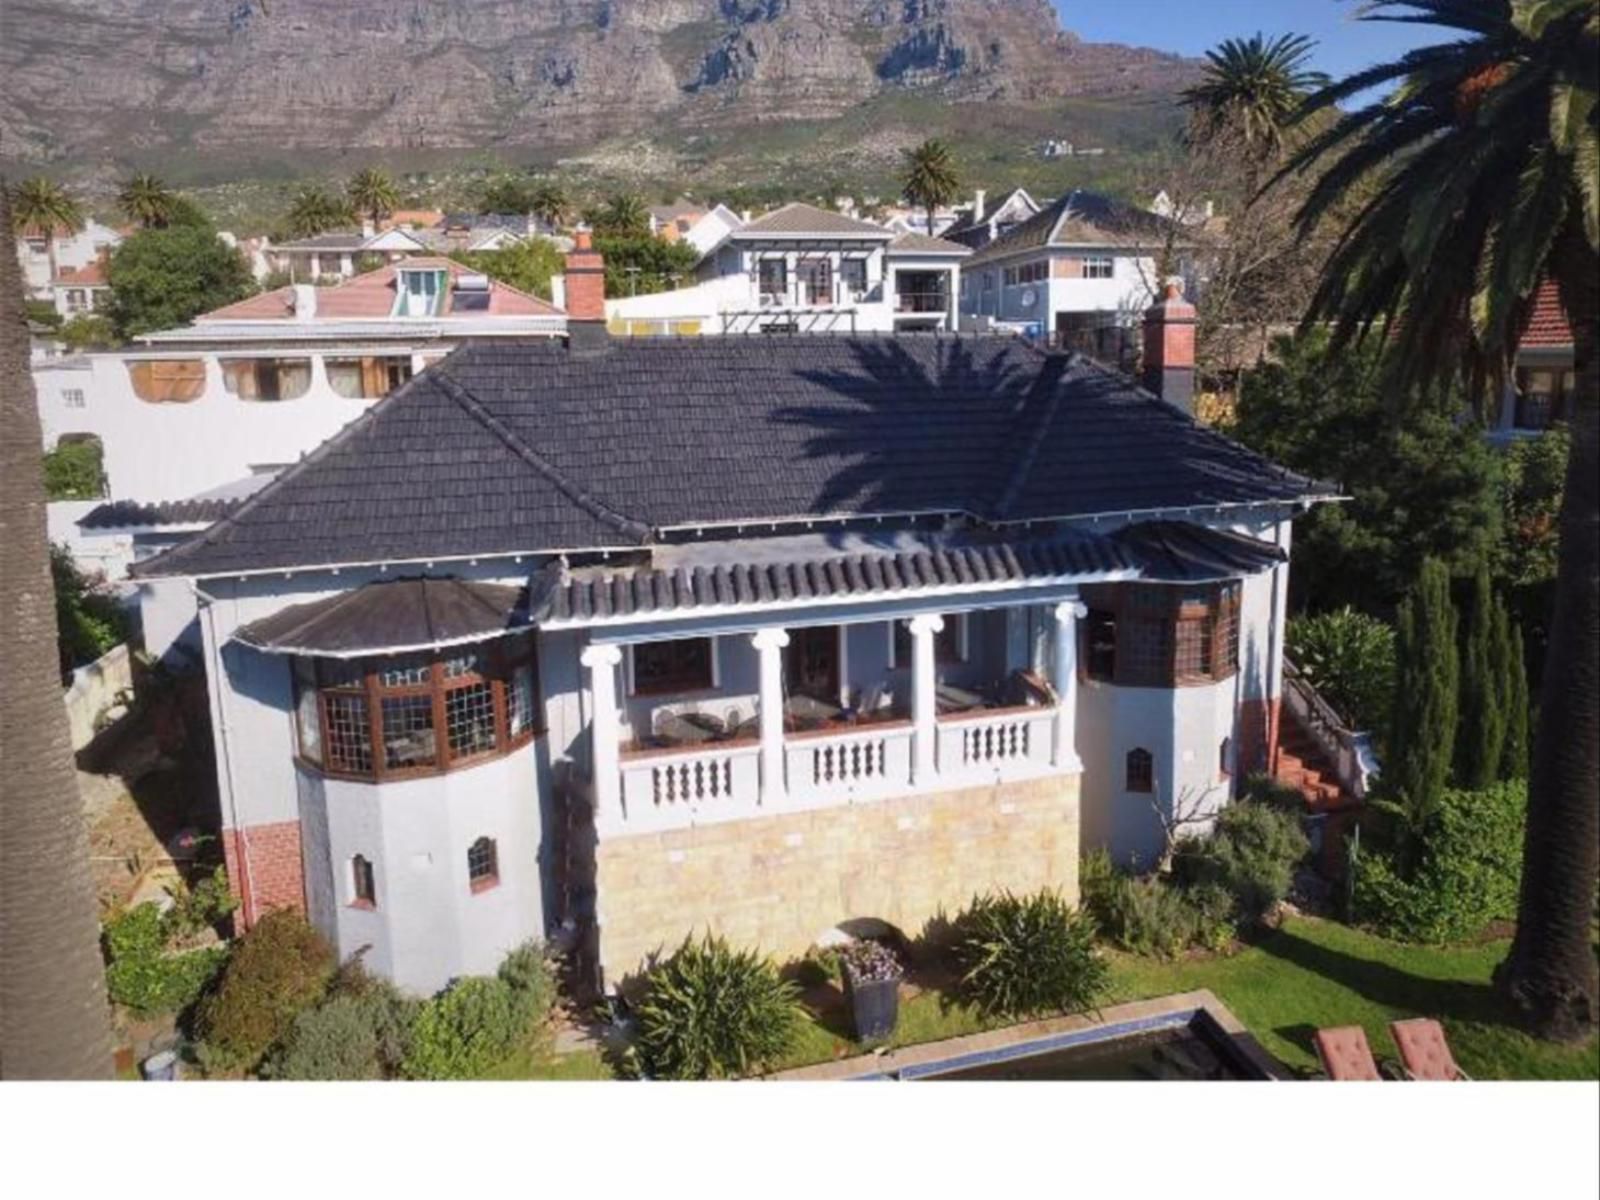 Cape Riviera Oranjezicht Cape Town Western Cape South Africa House, Building, Architecture